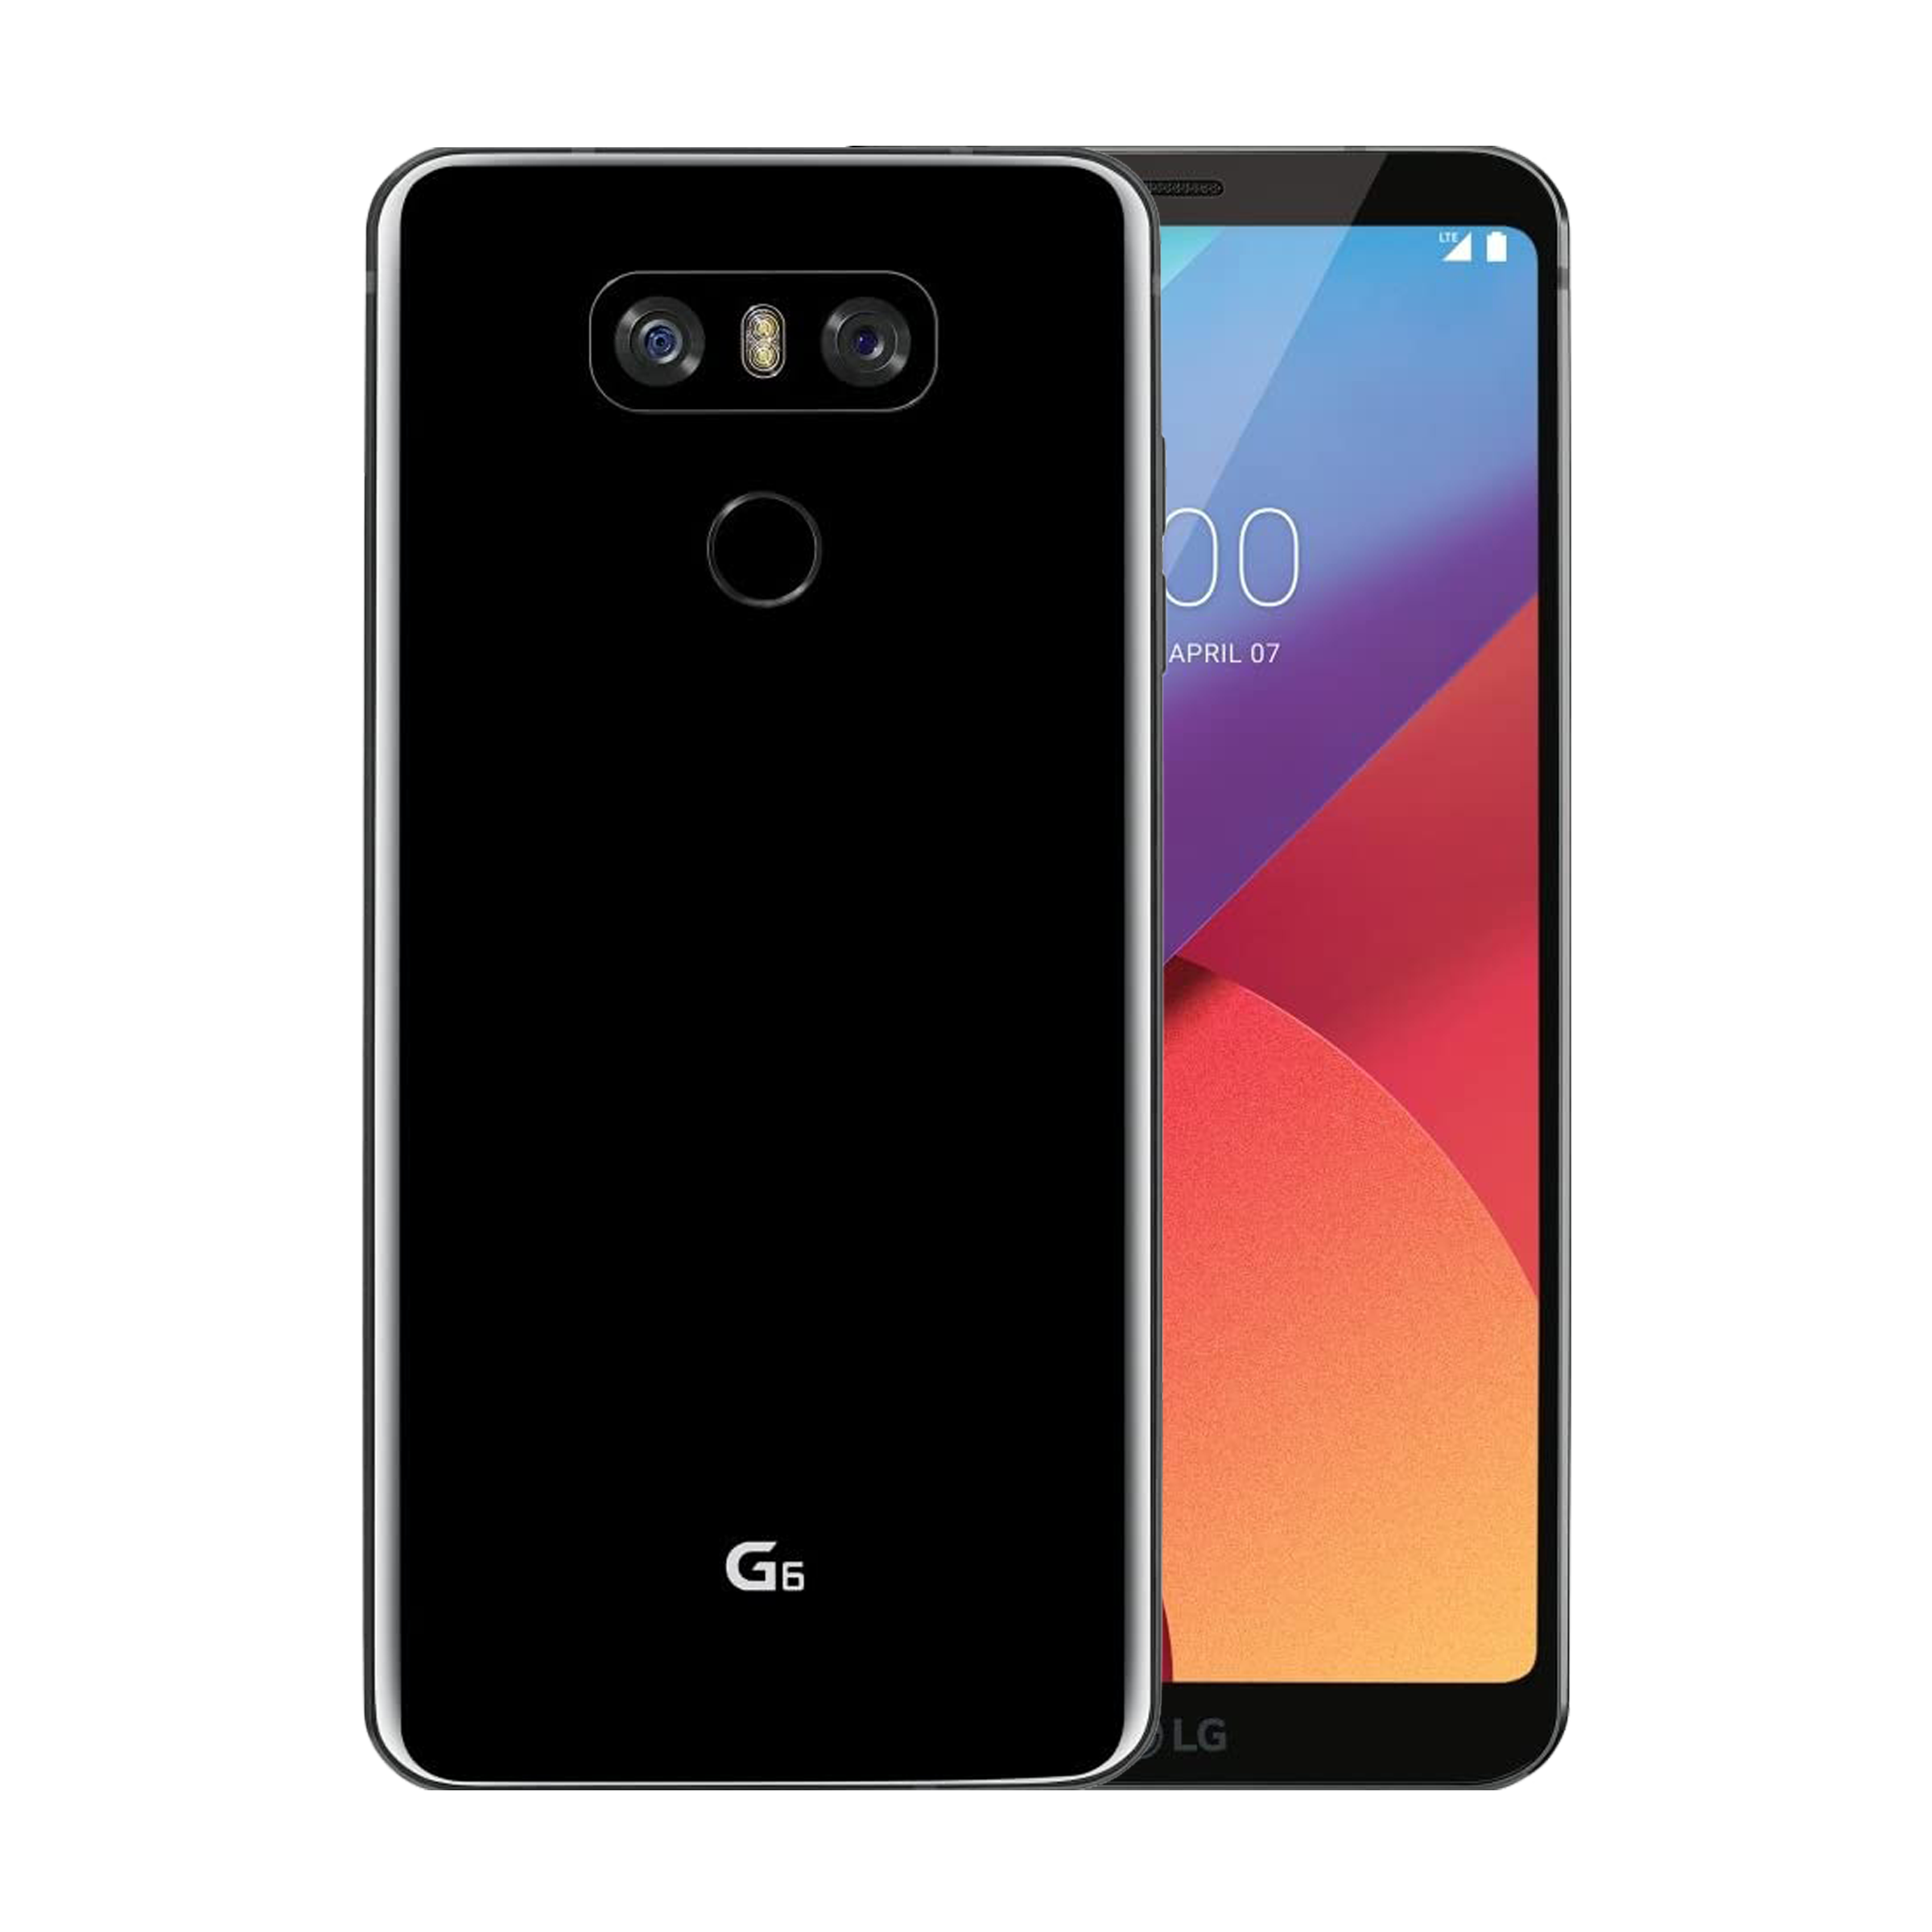 LG G6 Smartphone 32GB Black Good - Unlocked 32GB Black Good